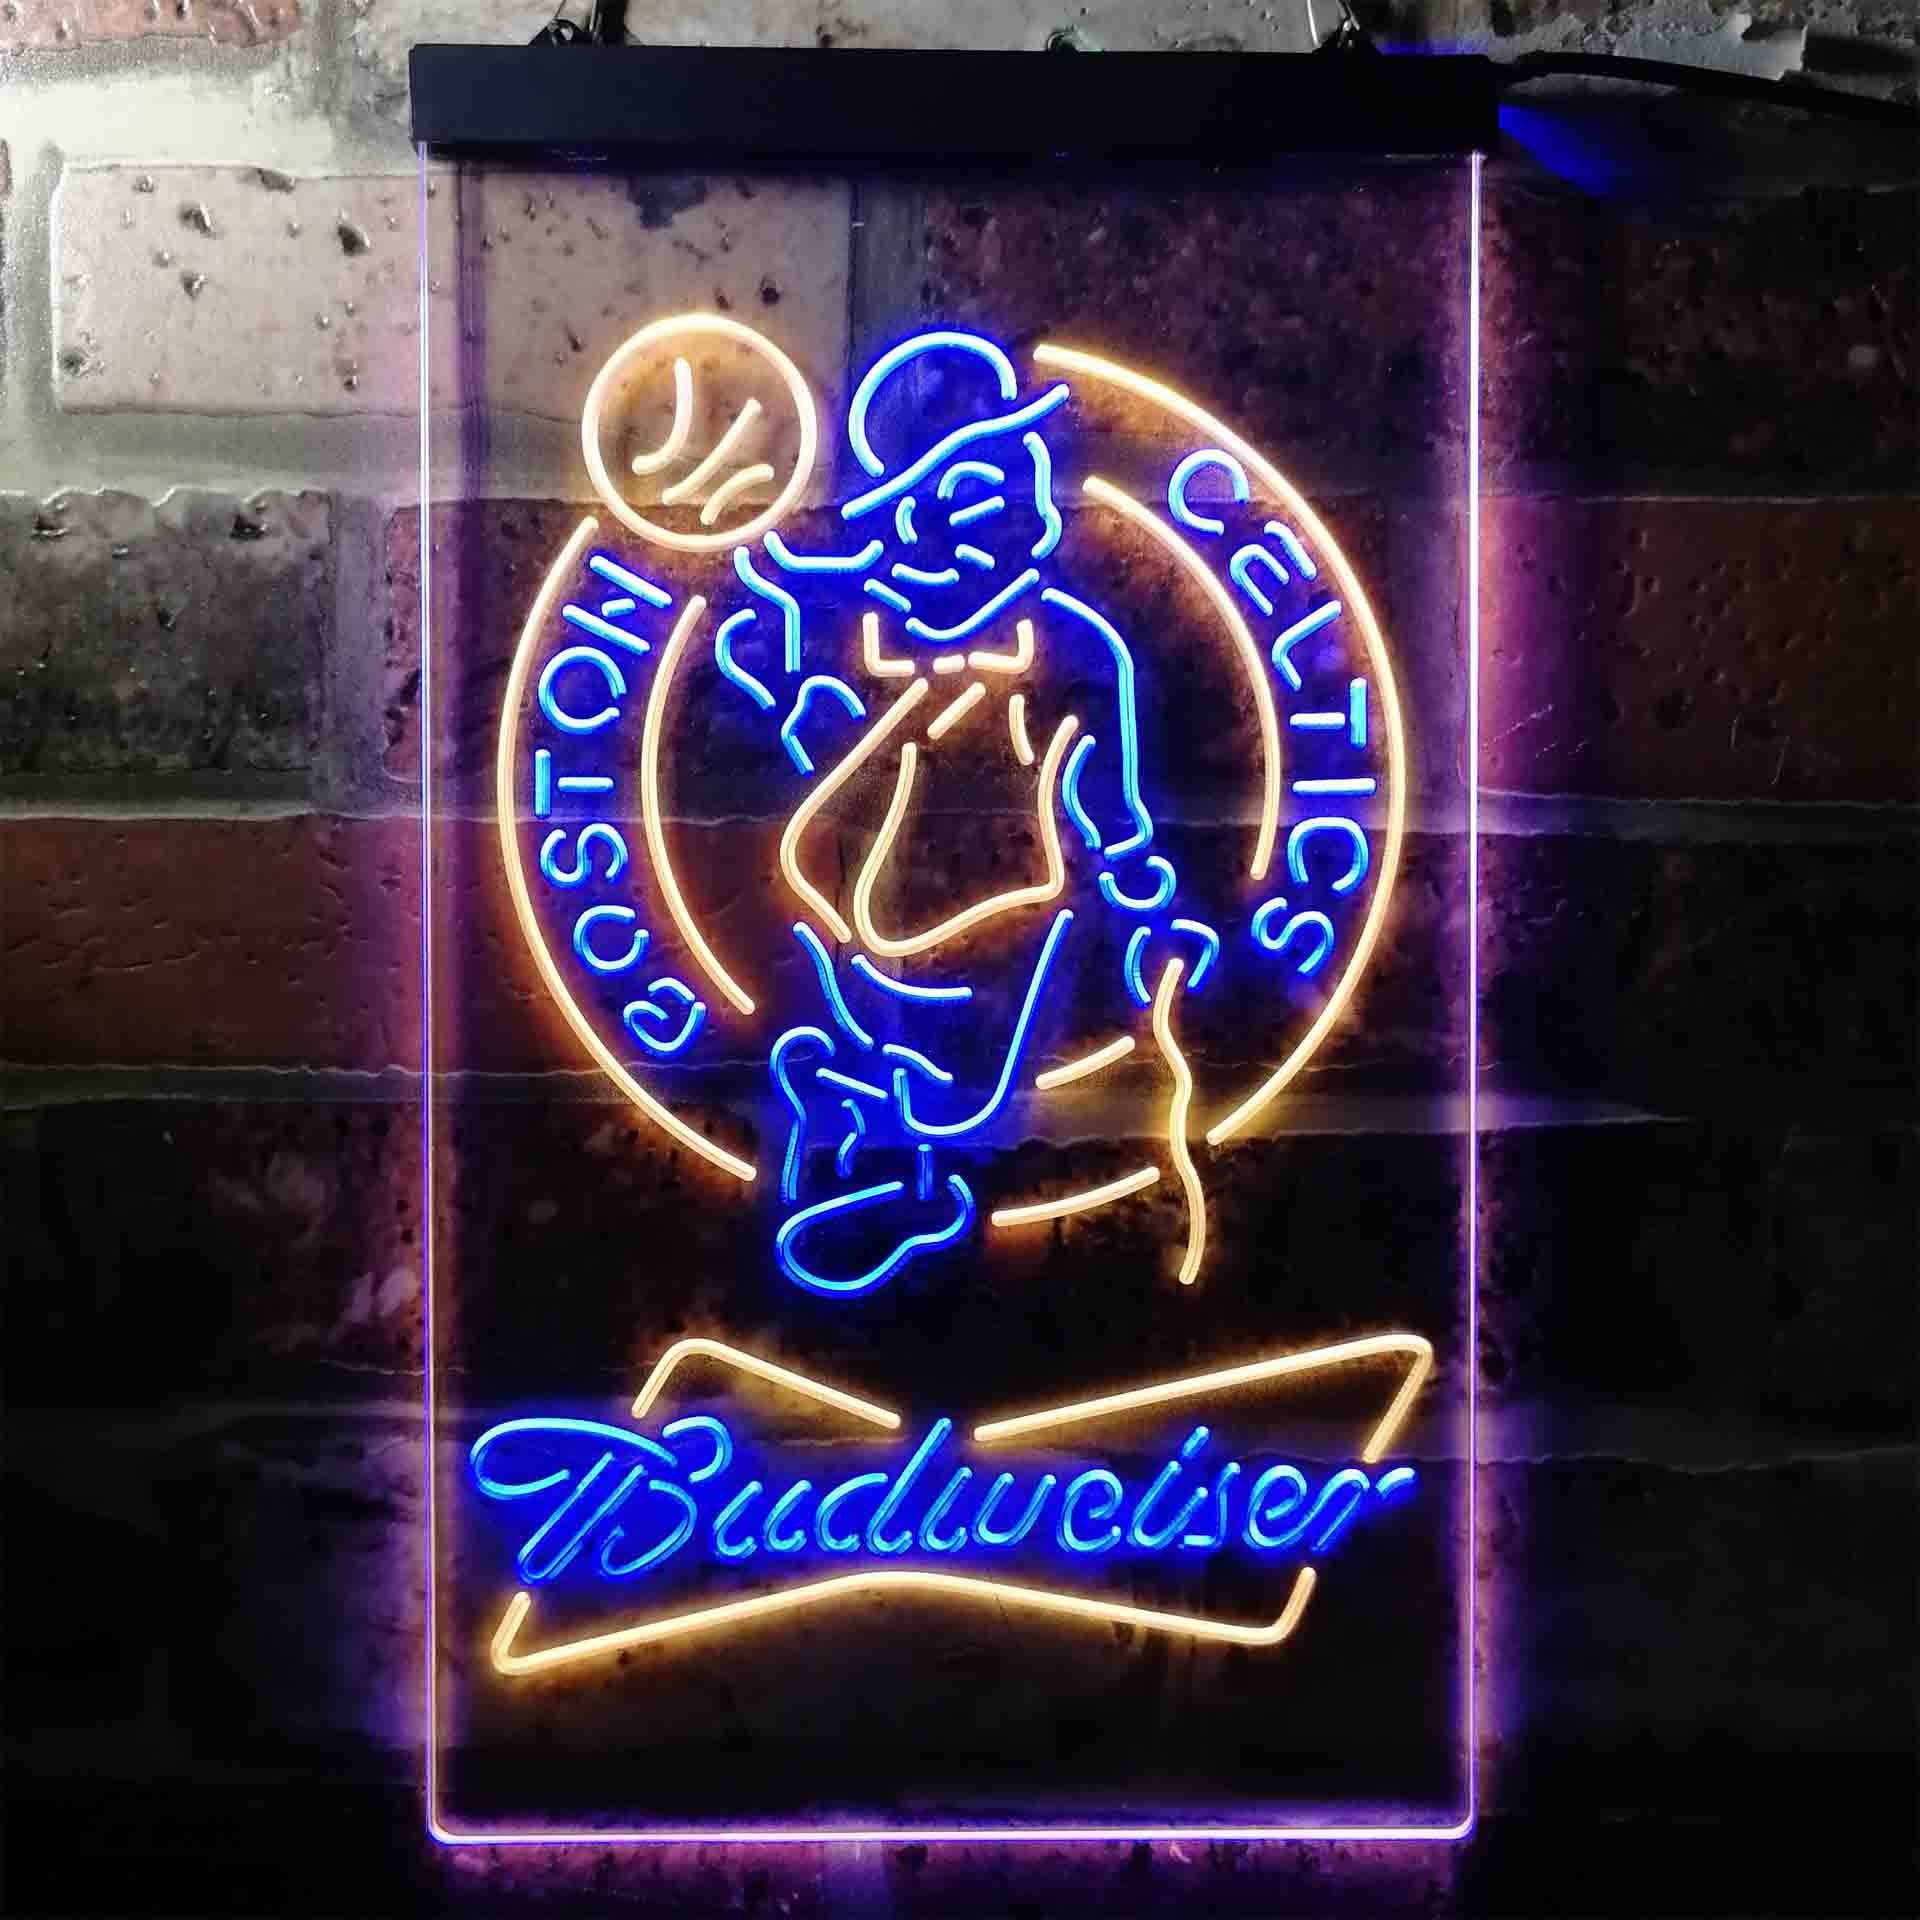 Boston Celtics Budweisers LED Neon Sign